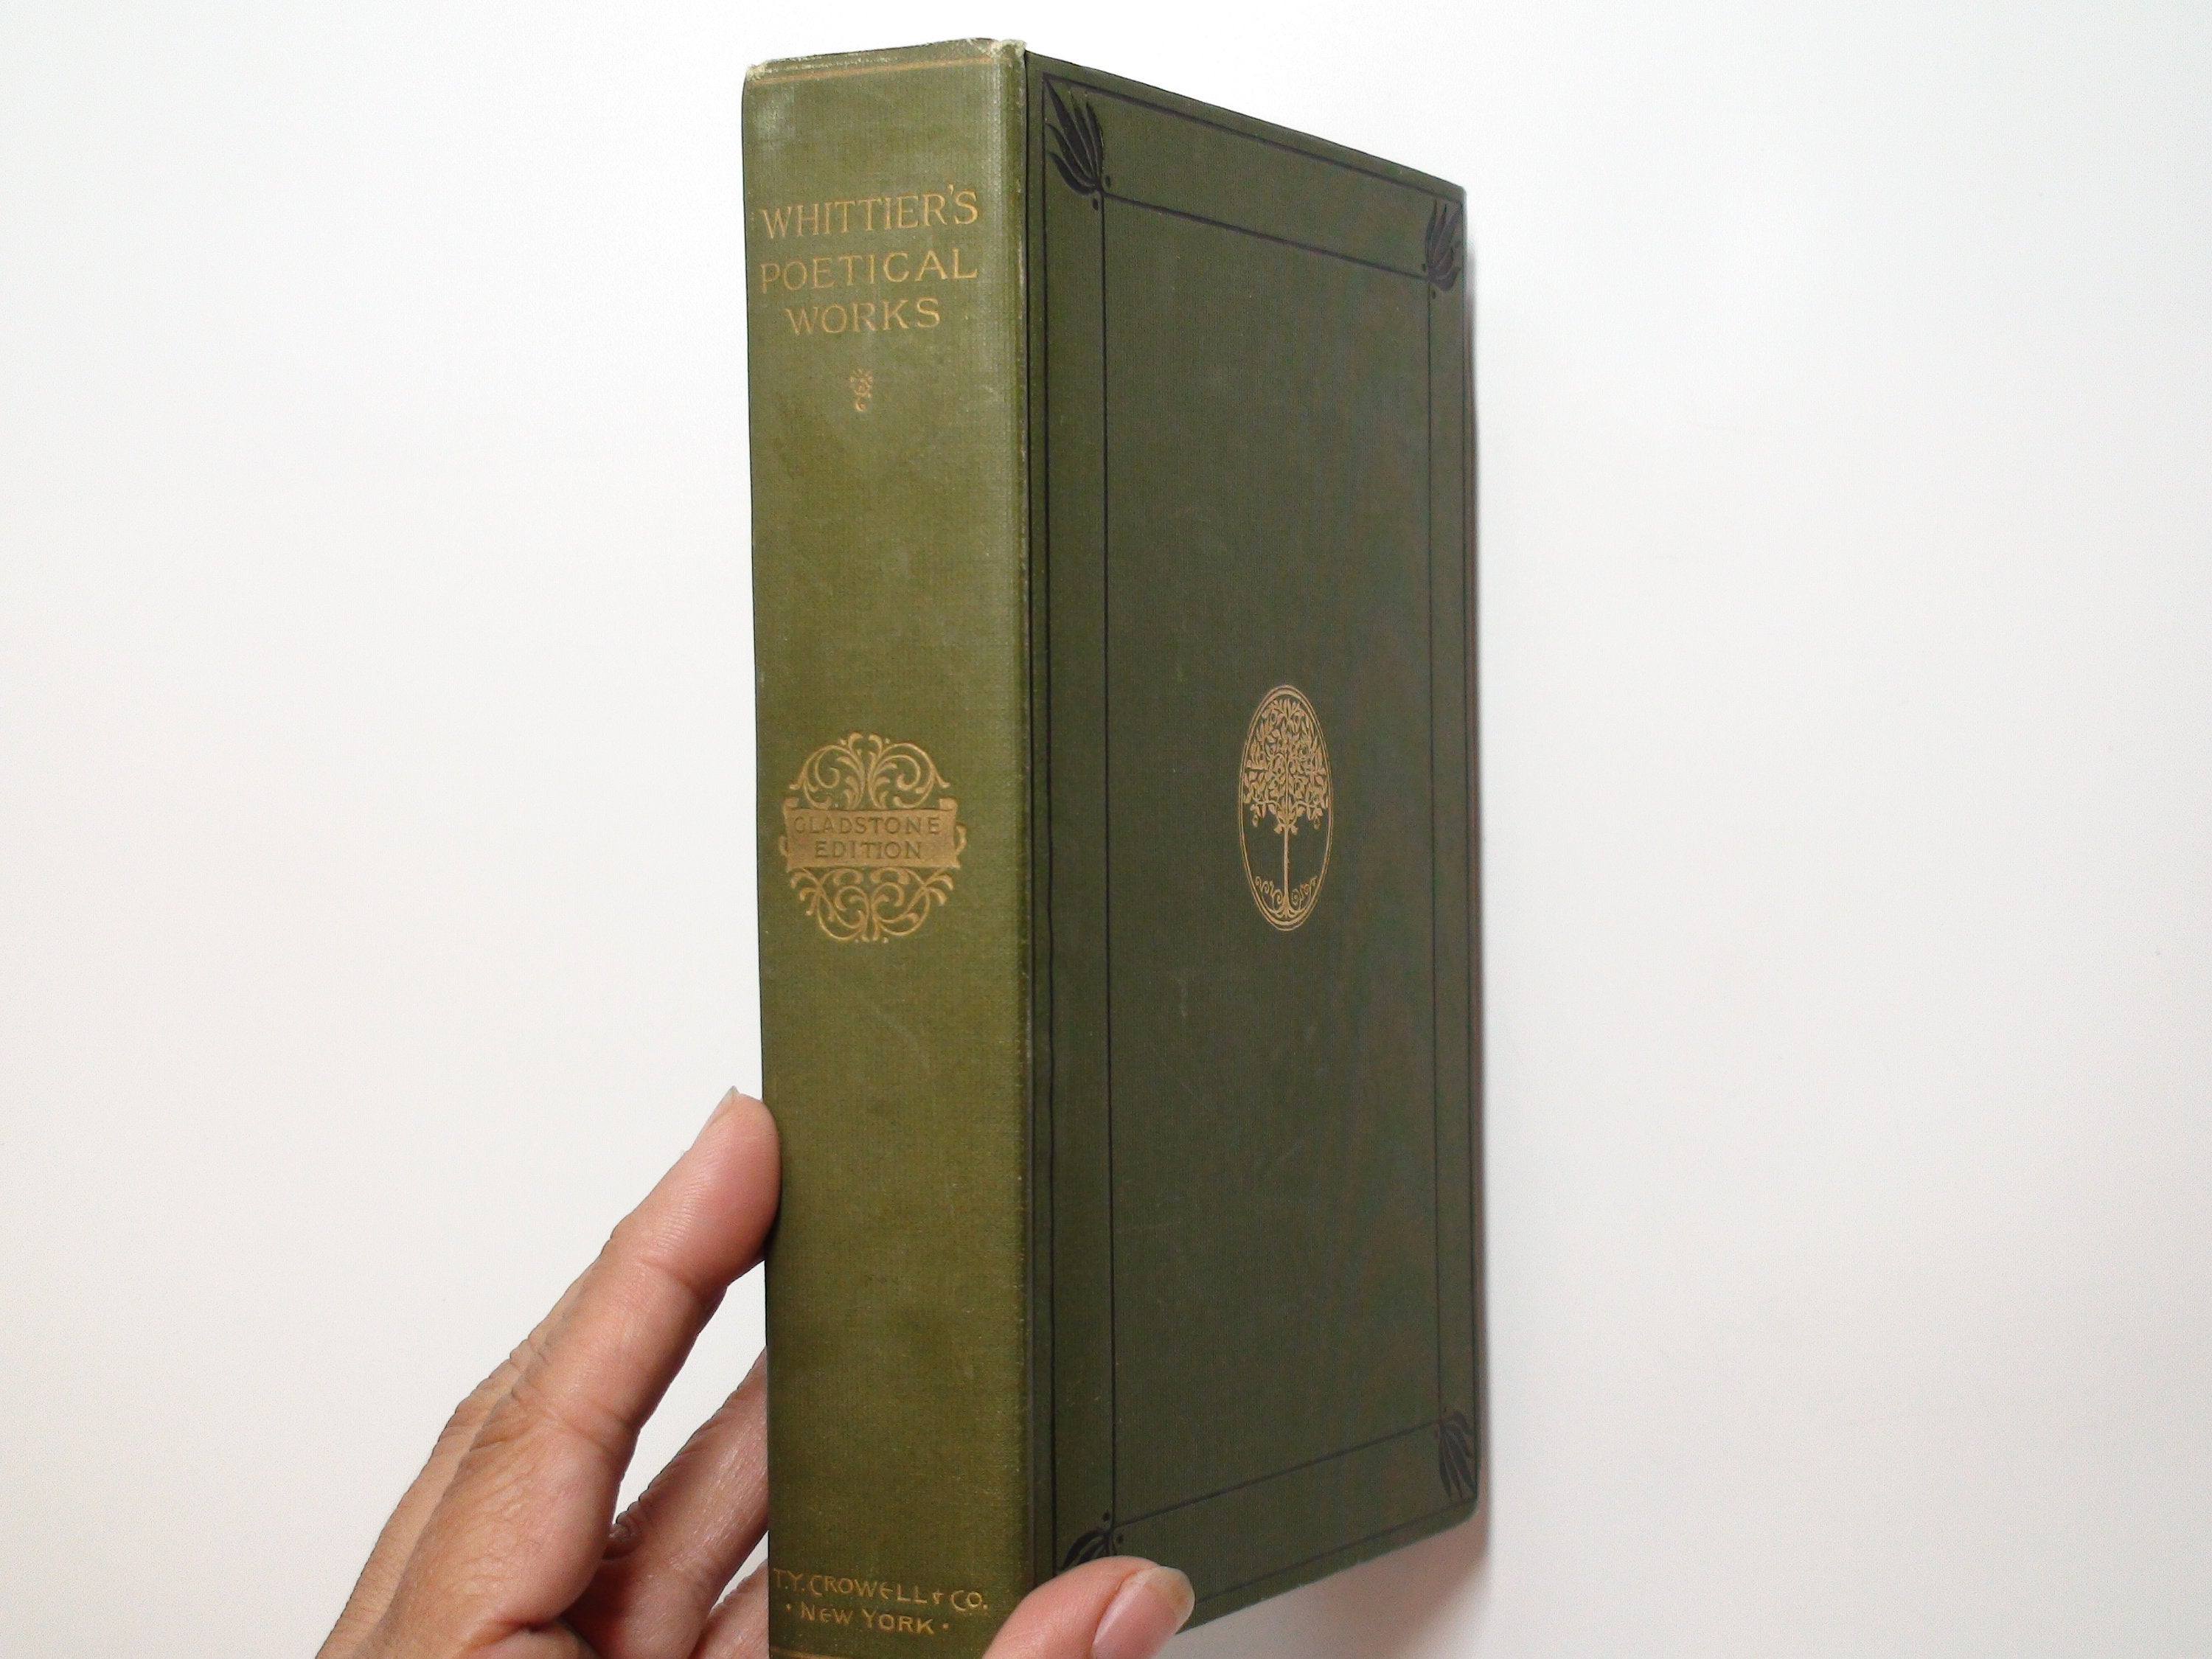 Early Poems of John Greenleaf Whittier, Thomas Y. Crowell, 1893